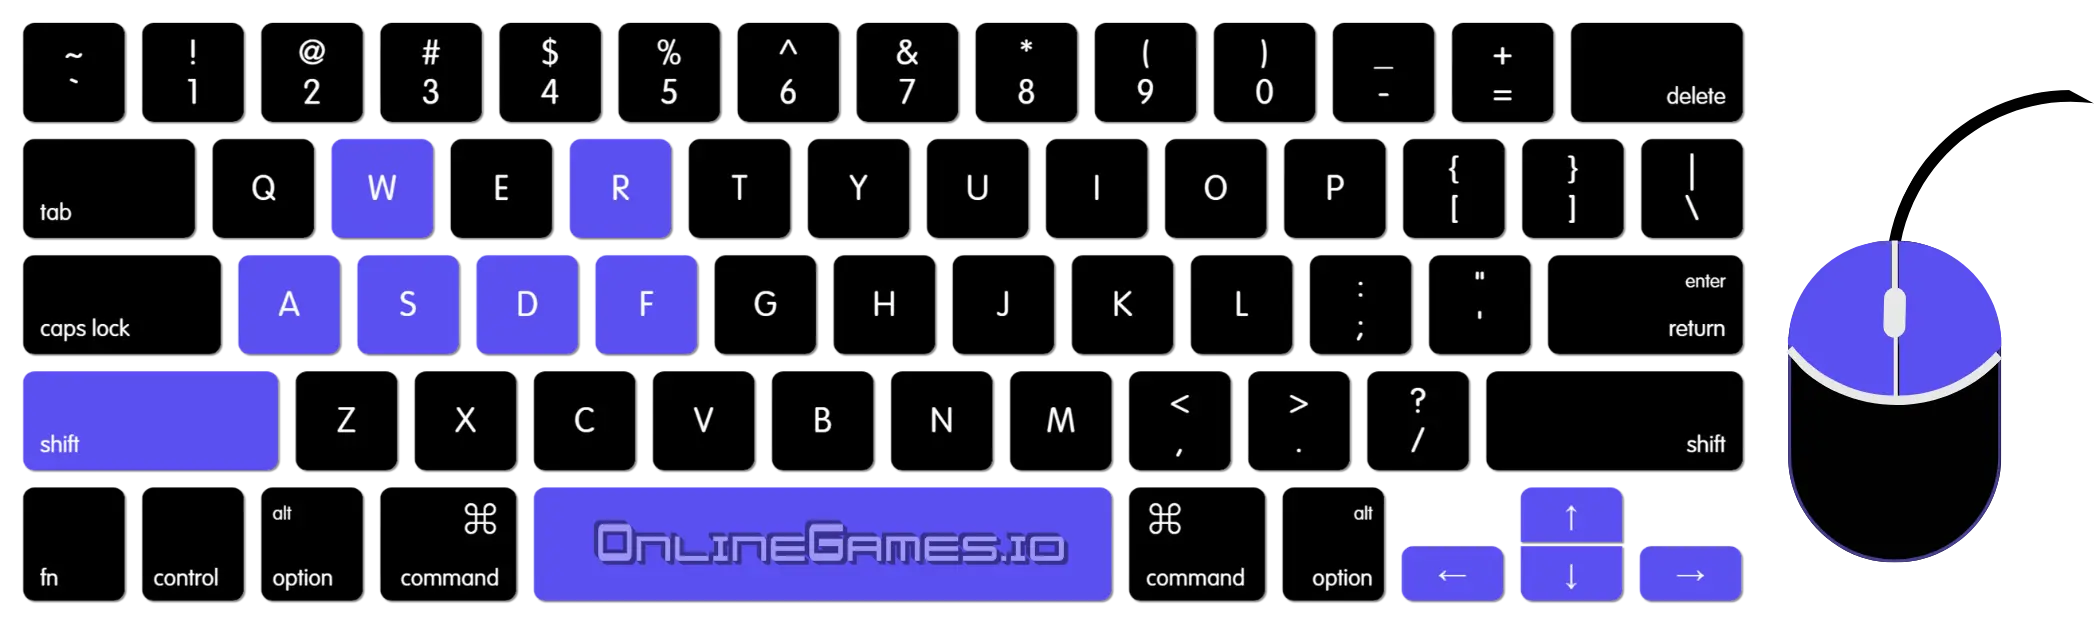 Krunker io Keyboard Controls